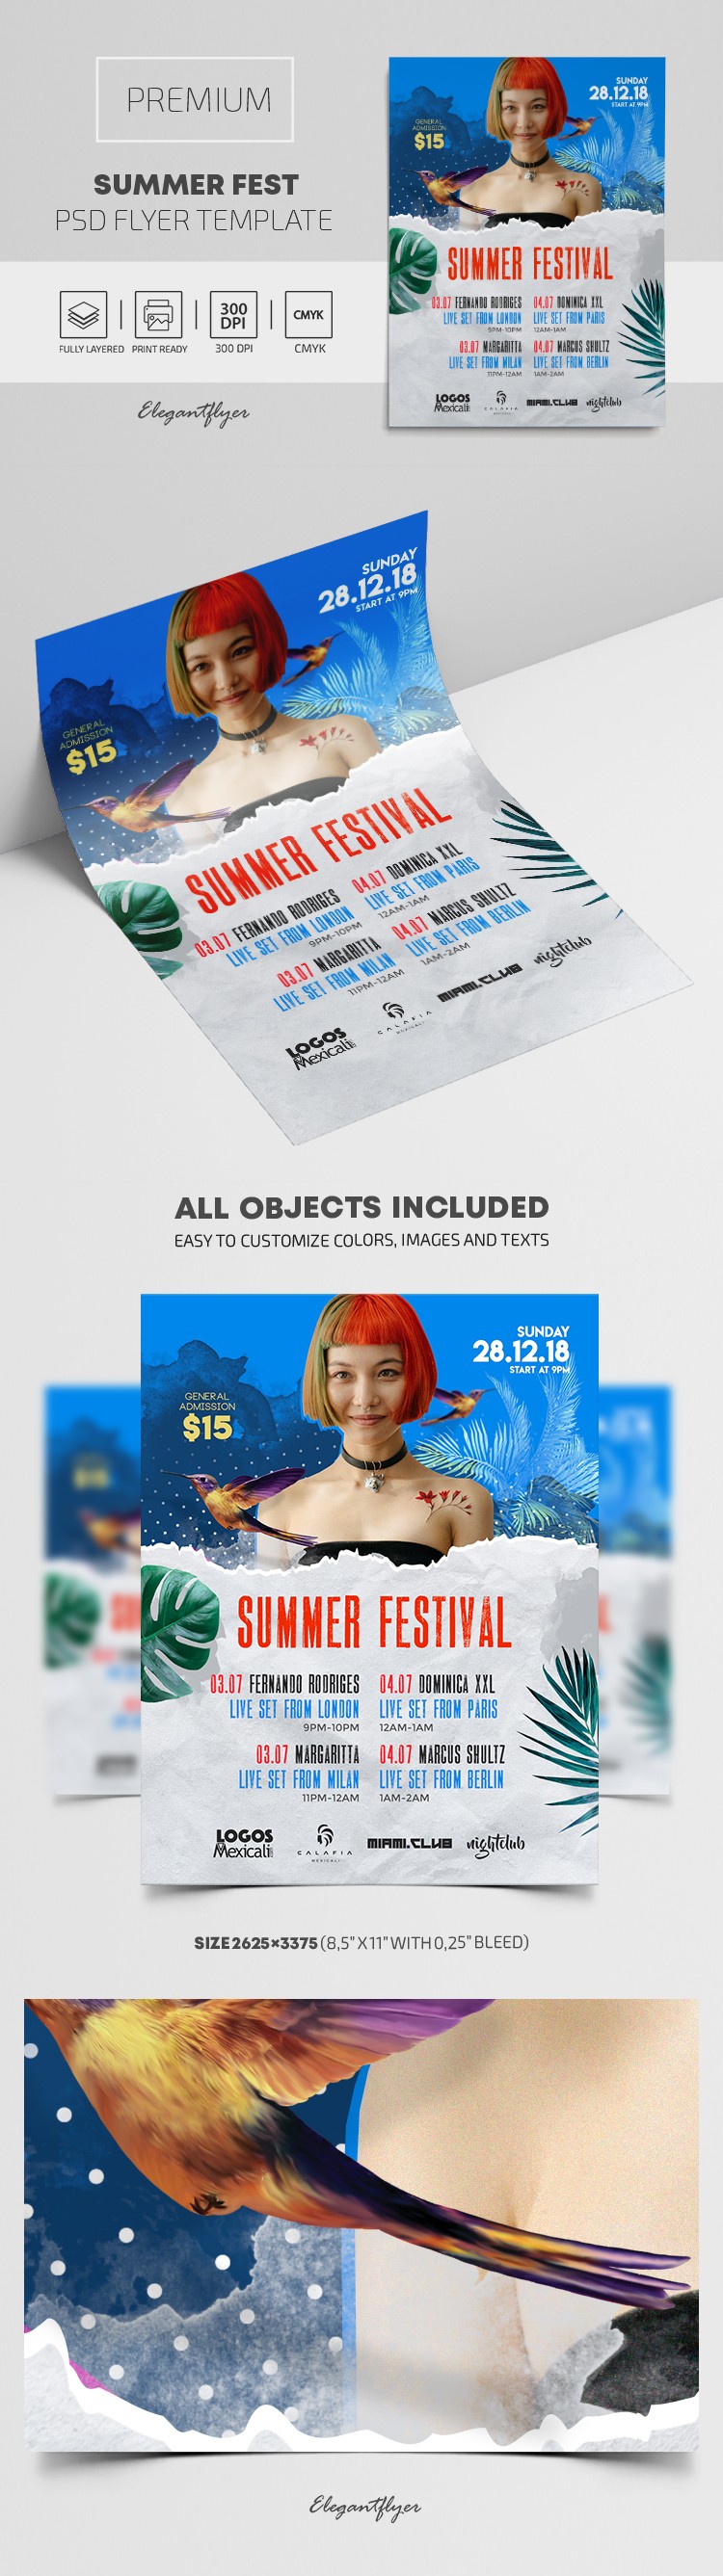 Summer Fest Flyer by ElegantFlyer